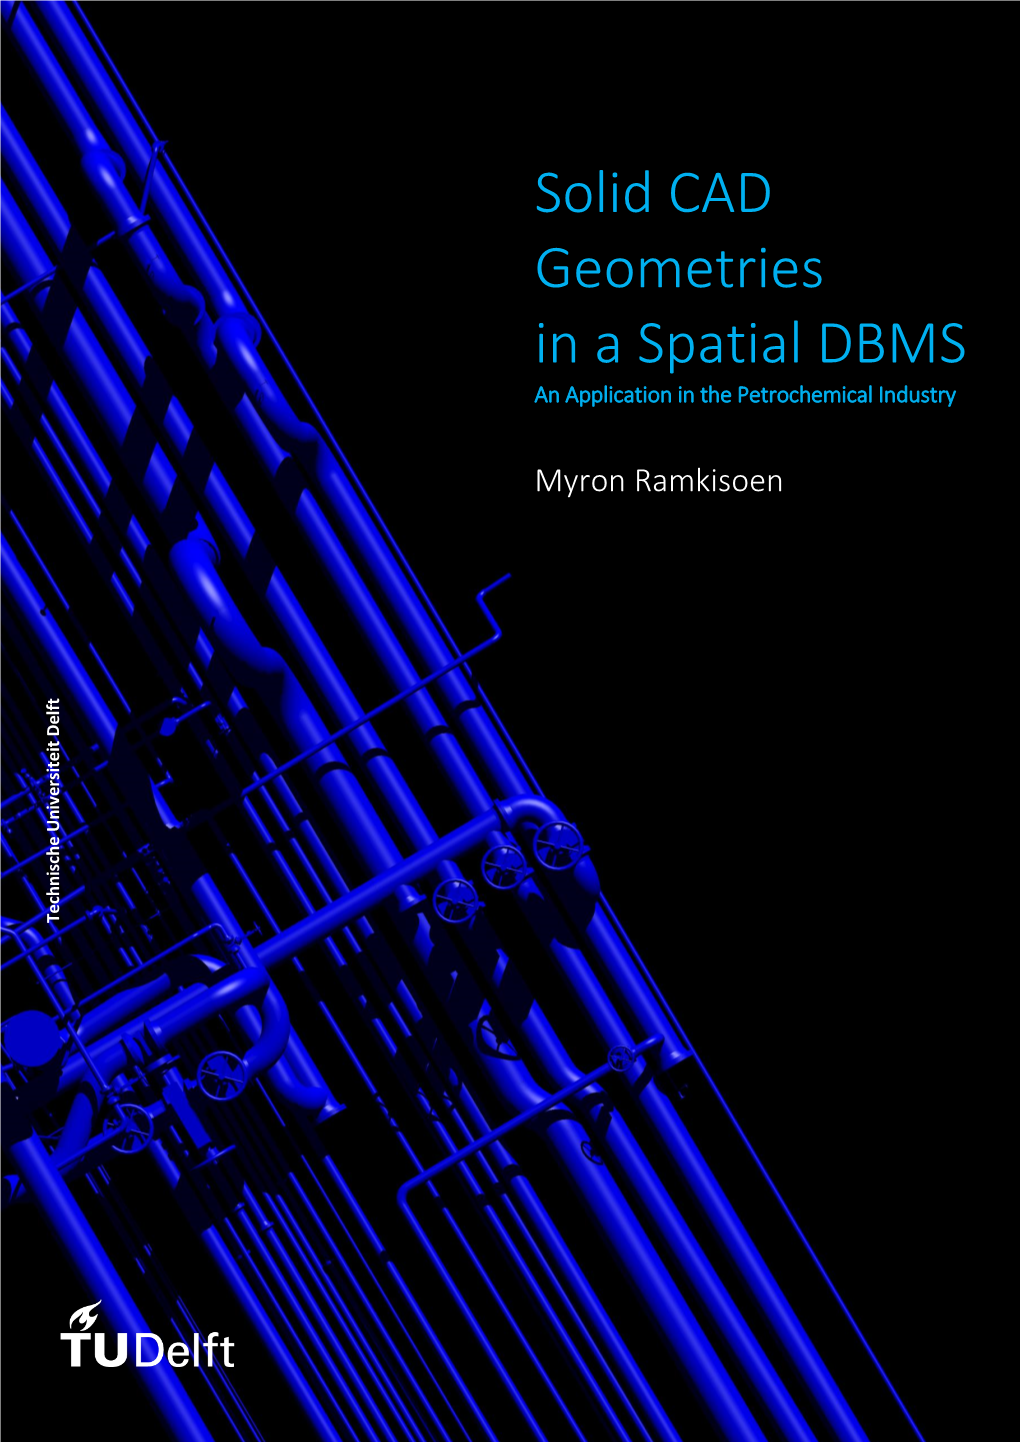 Solid CAD Geometries in a Spatial DBMS [Geef De Naam Van Het Bedrijf Op] an Application in the Petrochemical Industry